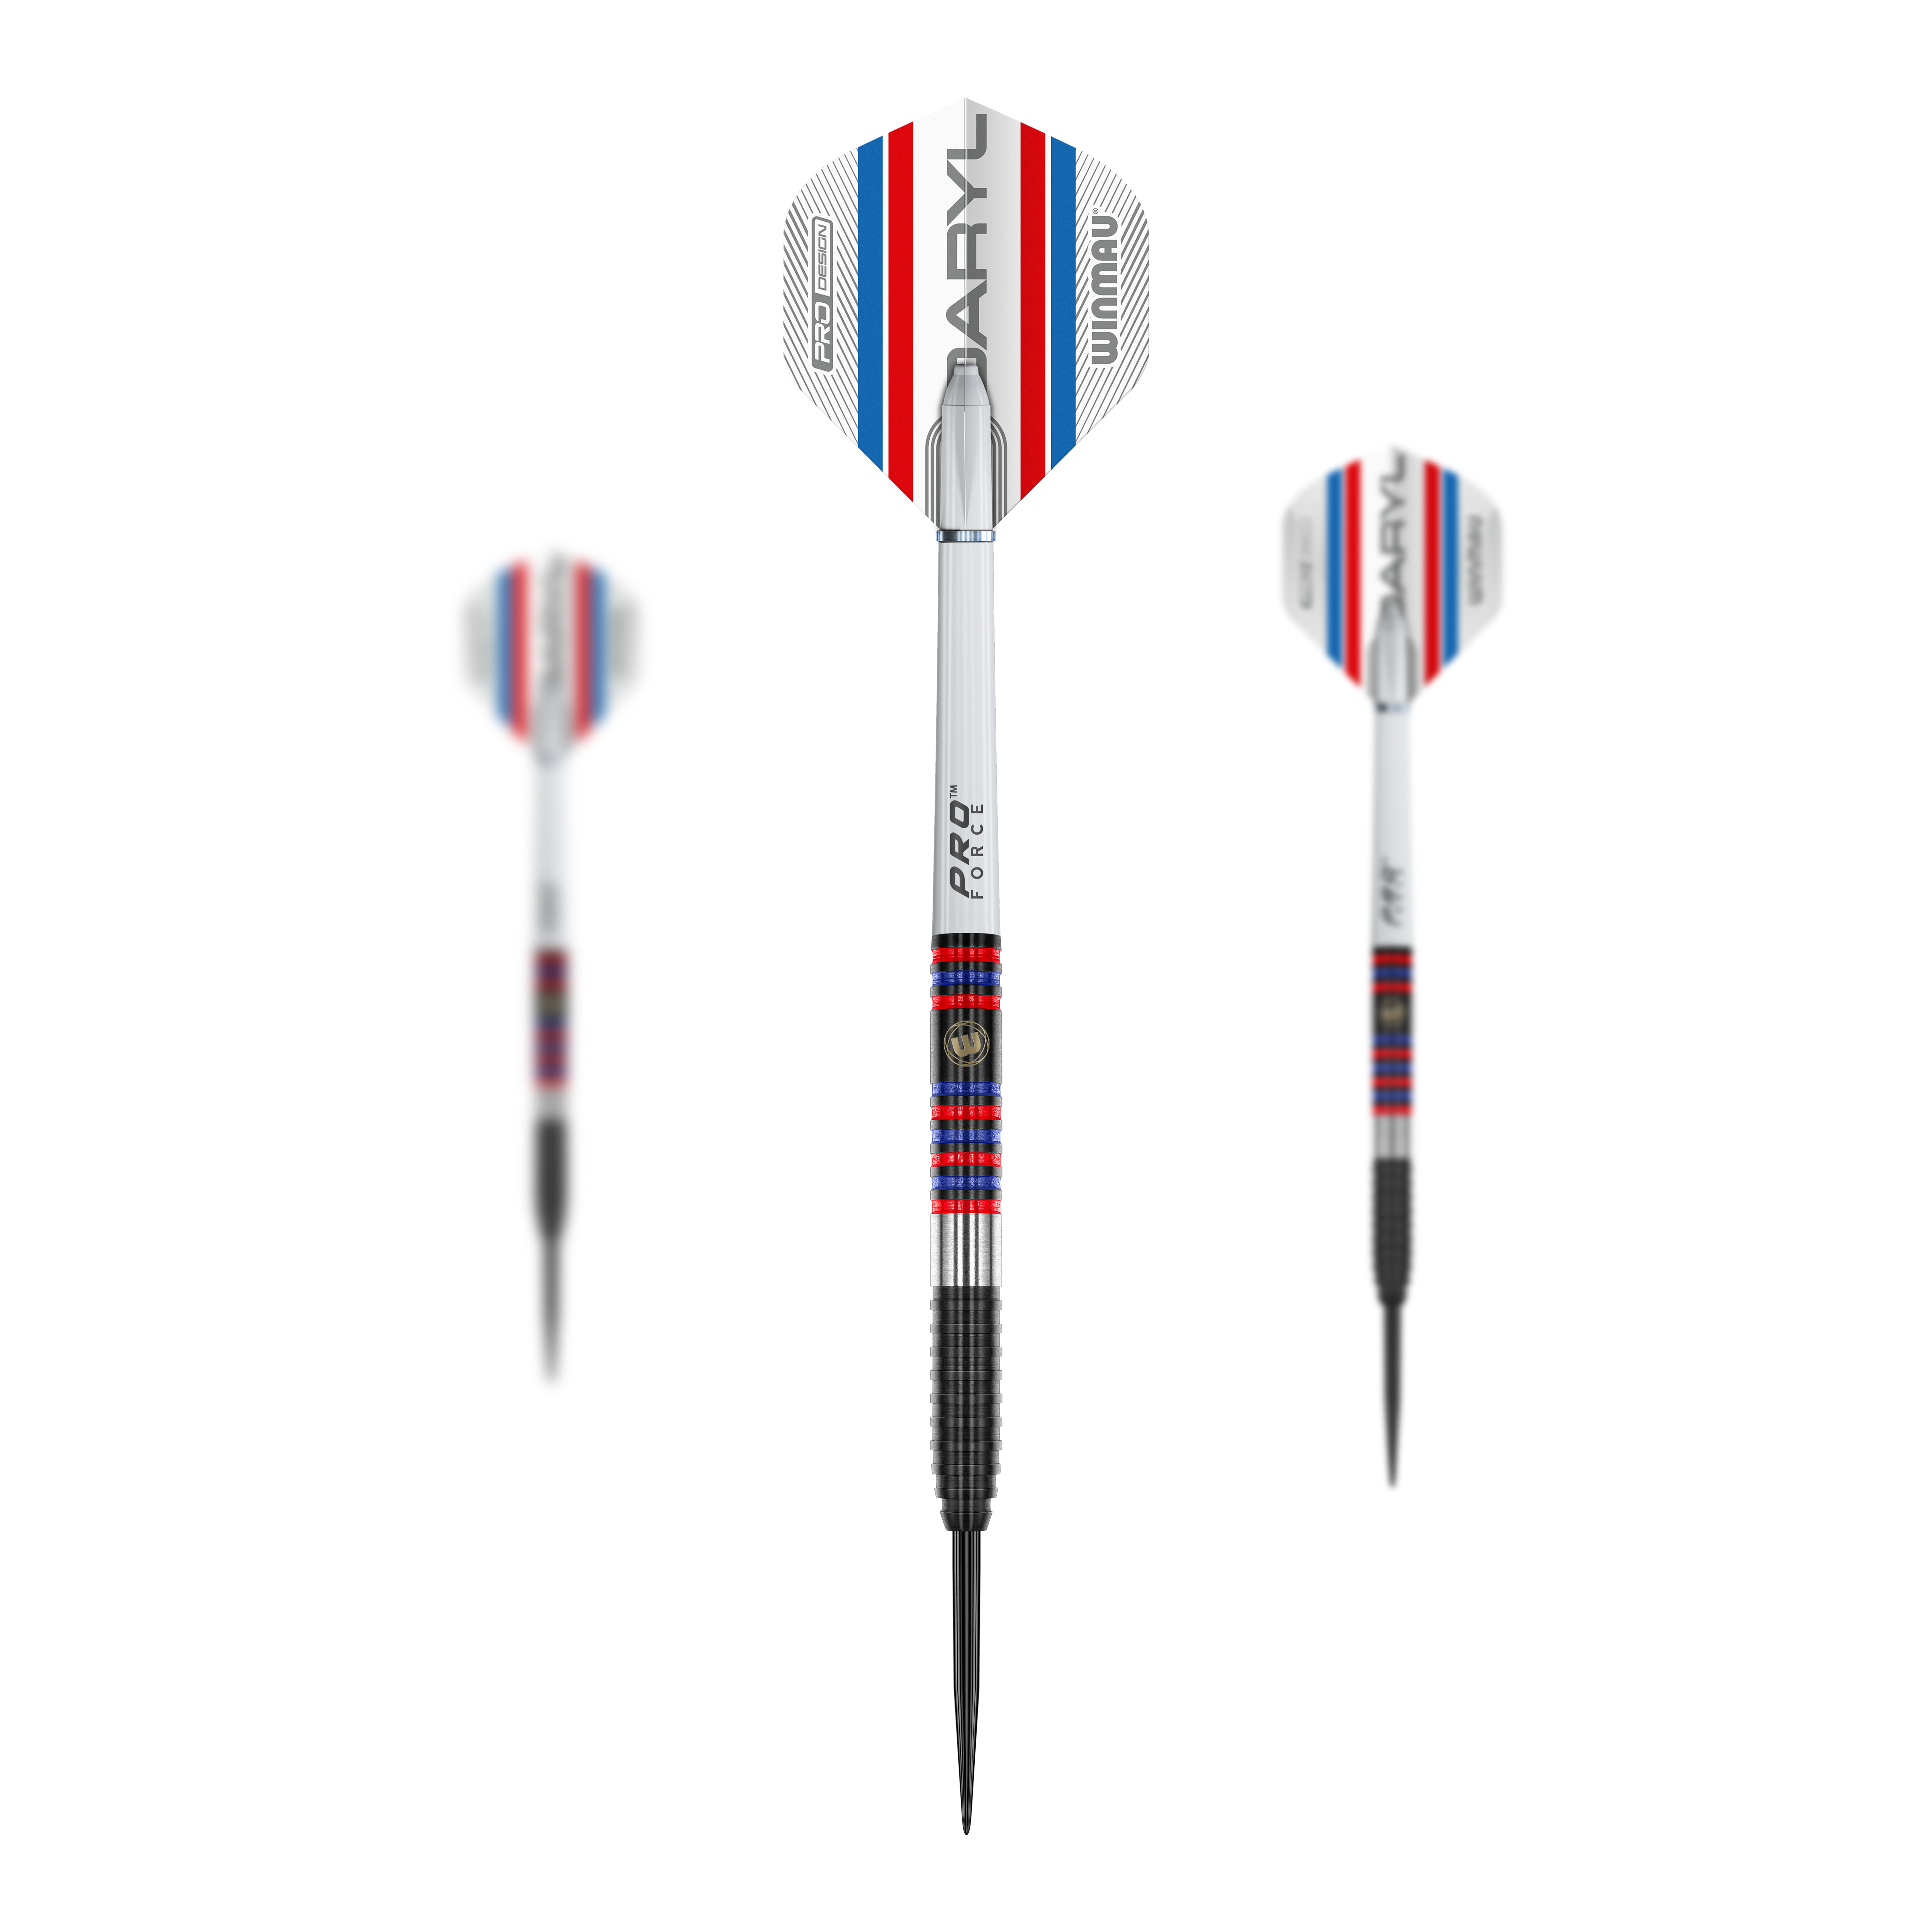 Winmau Daryl Gurney 85 Pro-Series steel darts